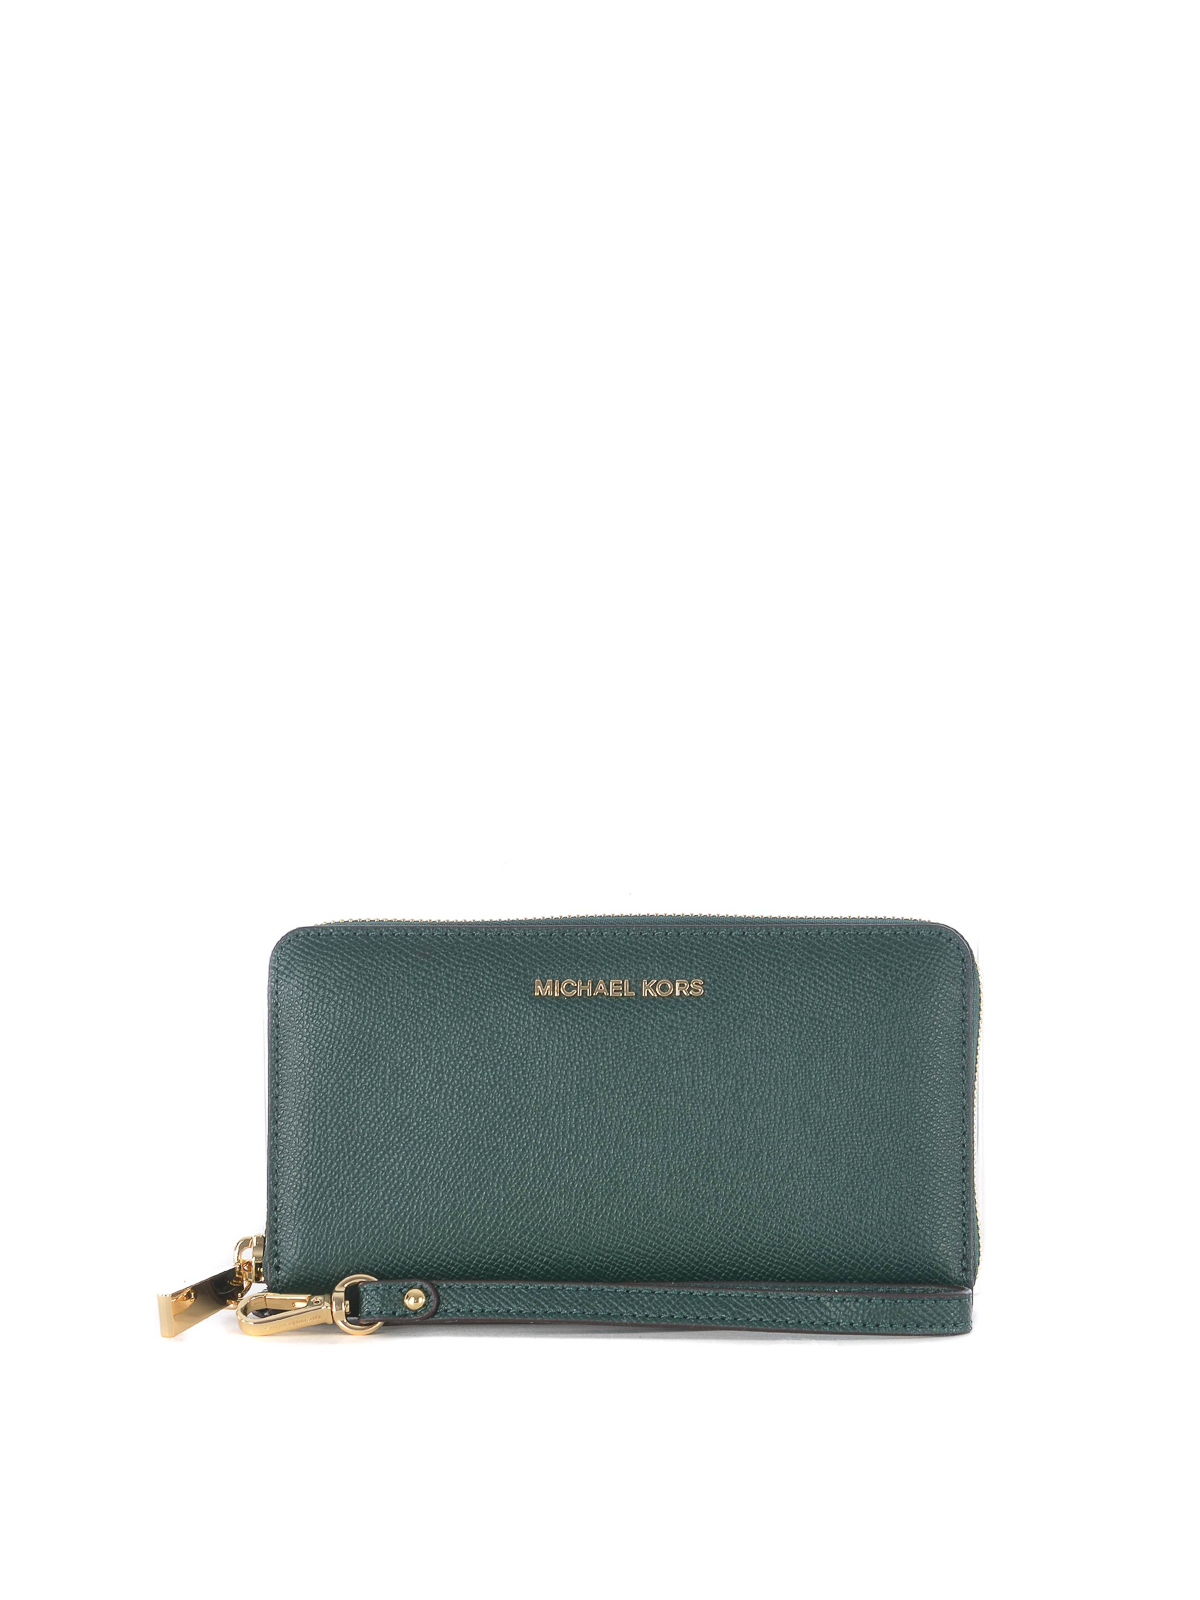 MK green wallet